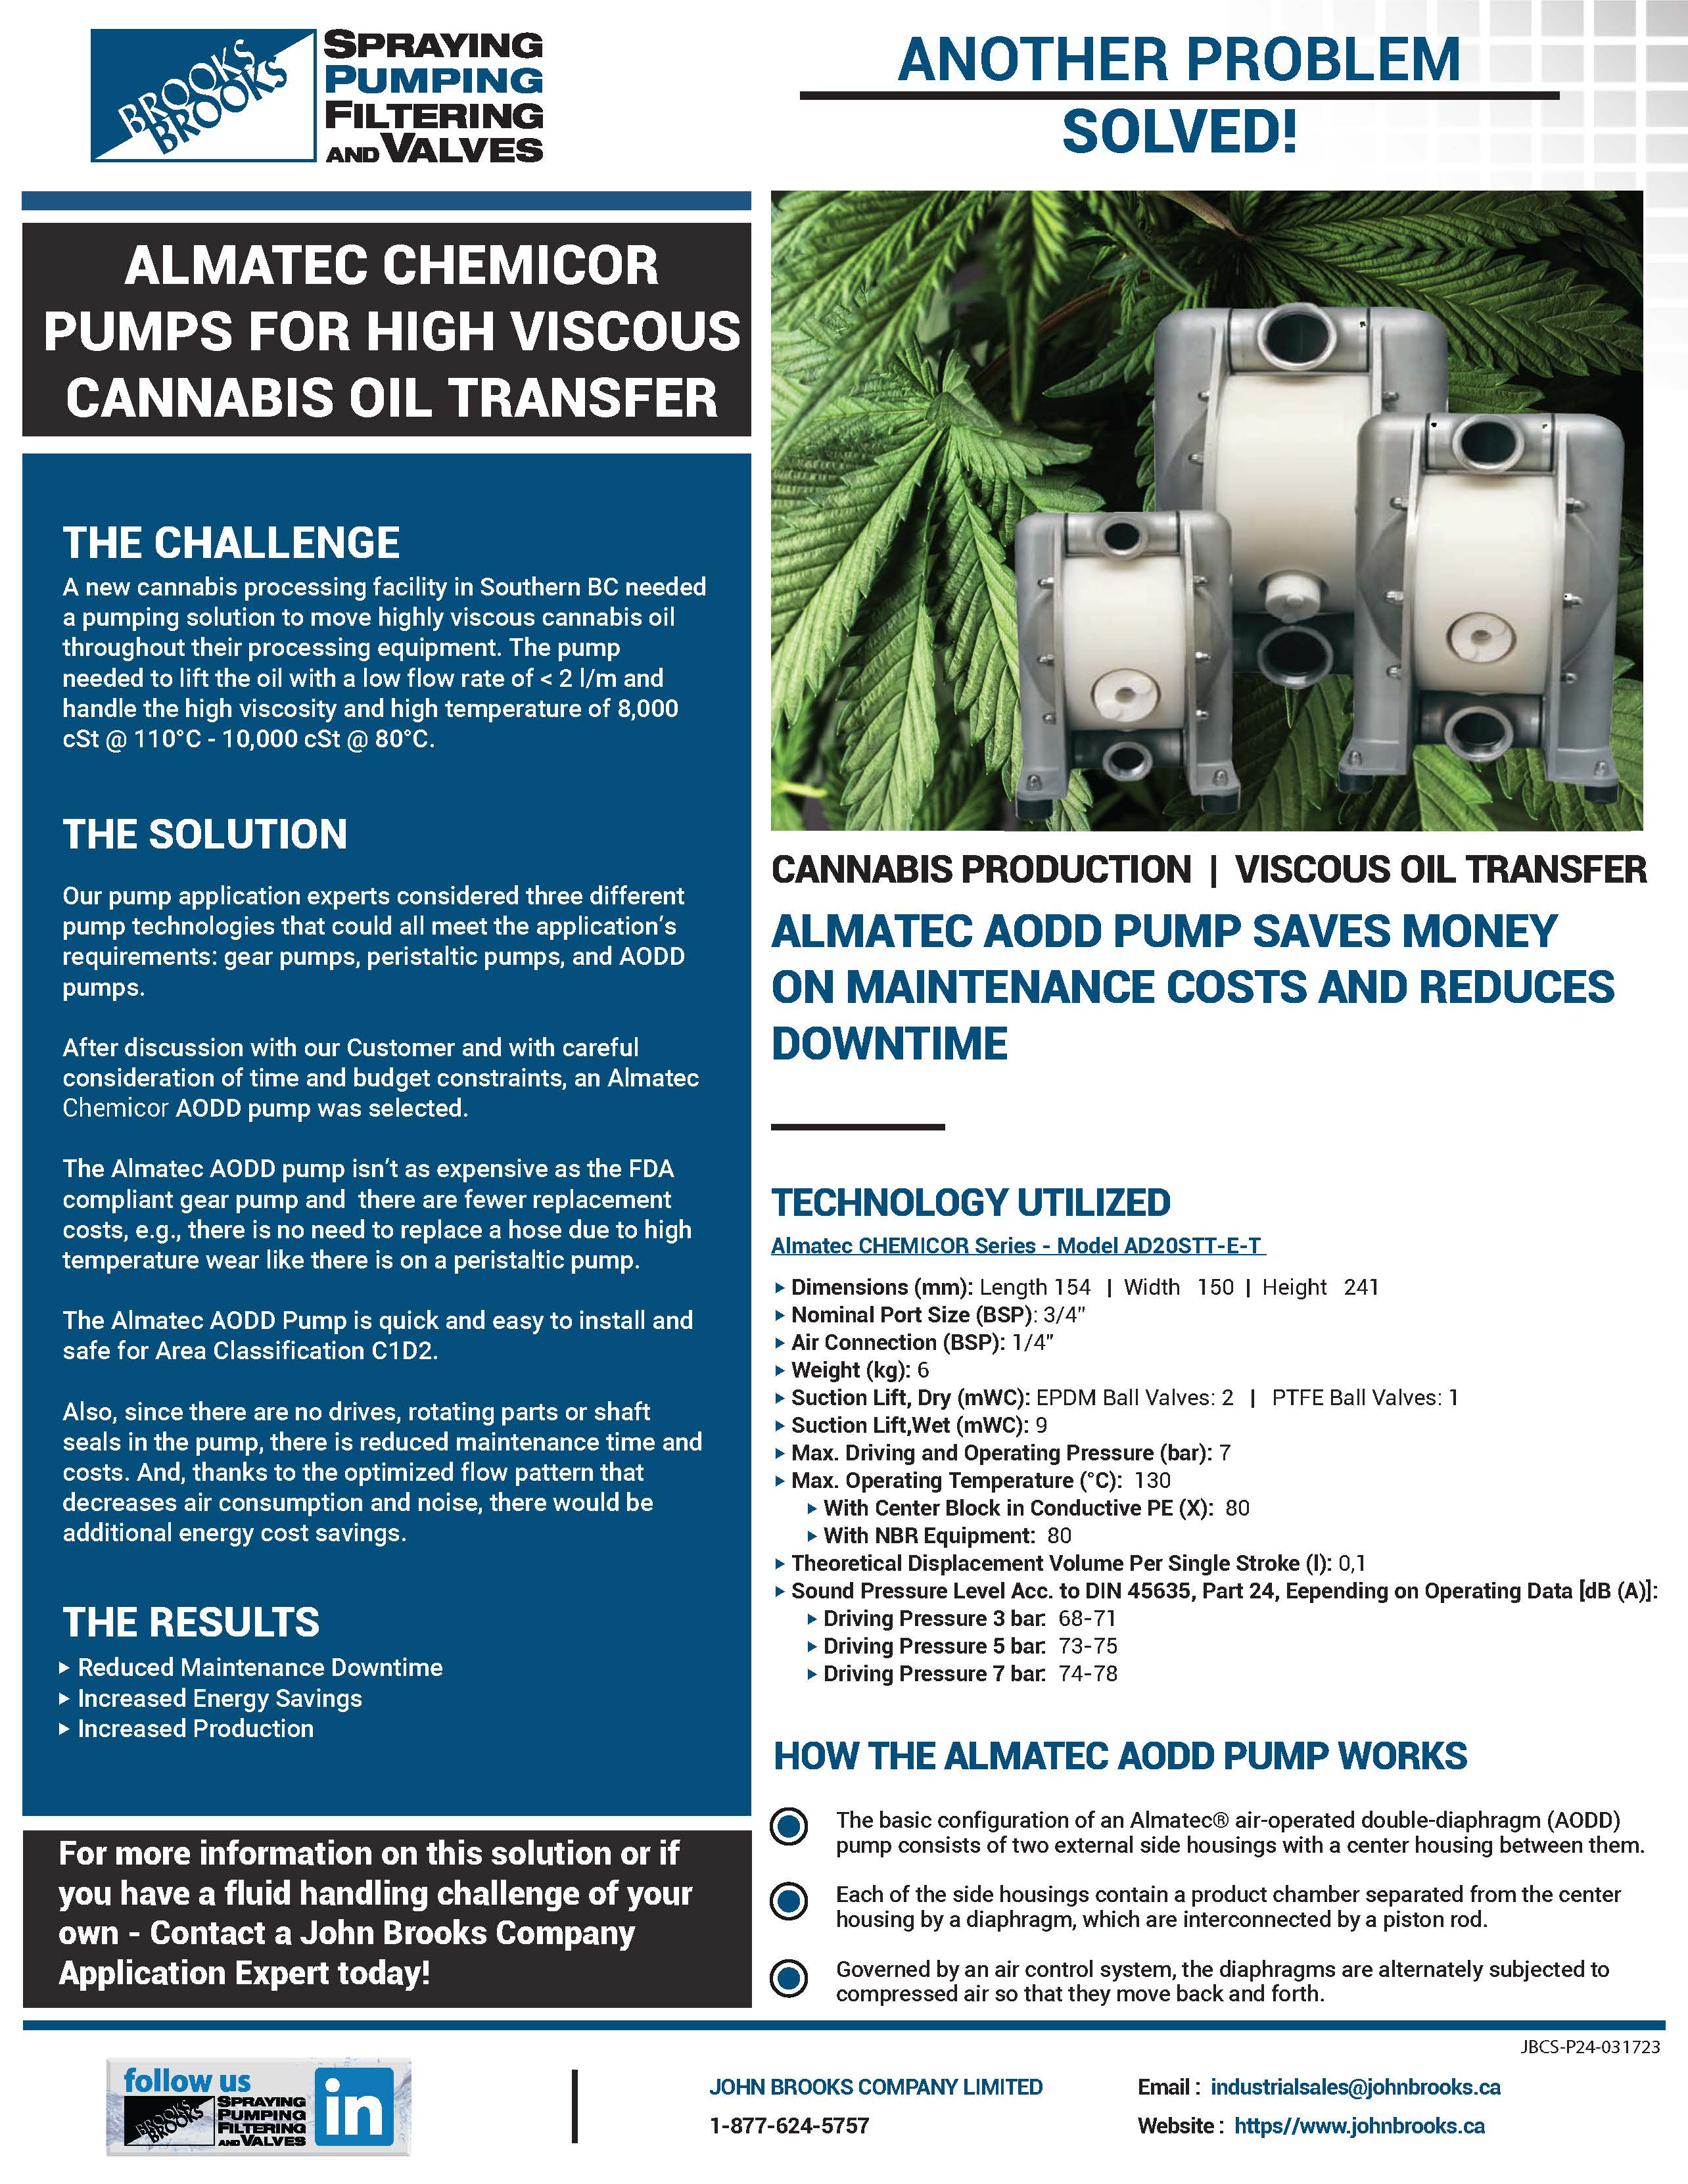 Almatec Chemicor AODD Pump for High Viscous Cannabis Oil Transfer by John Brooks Company